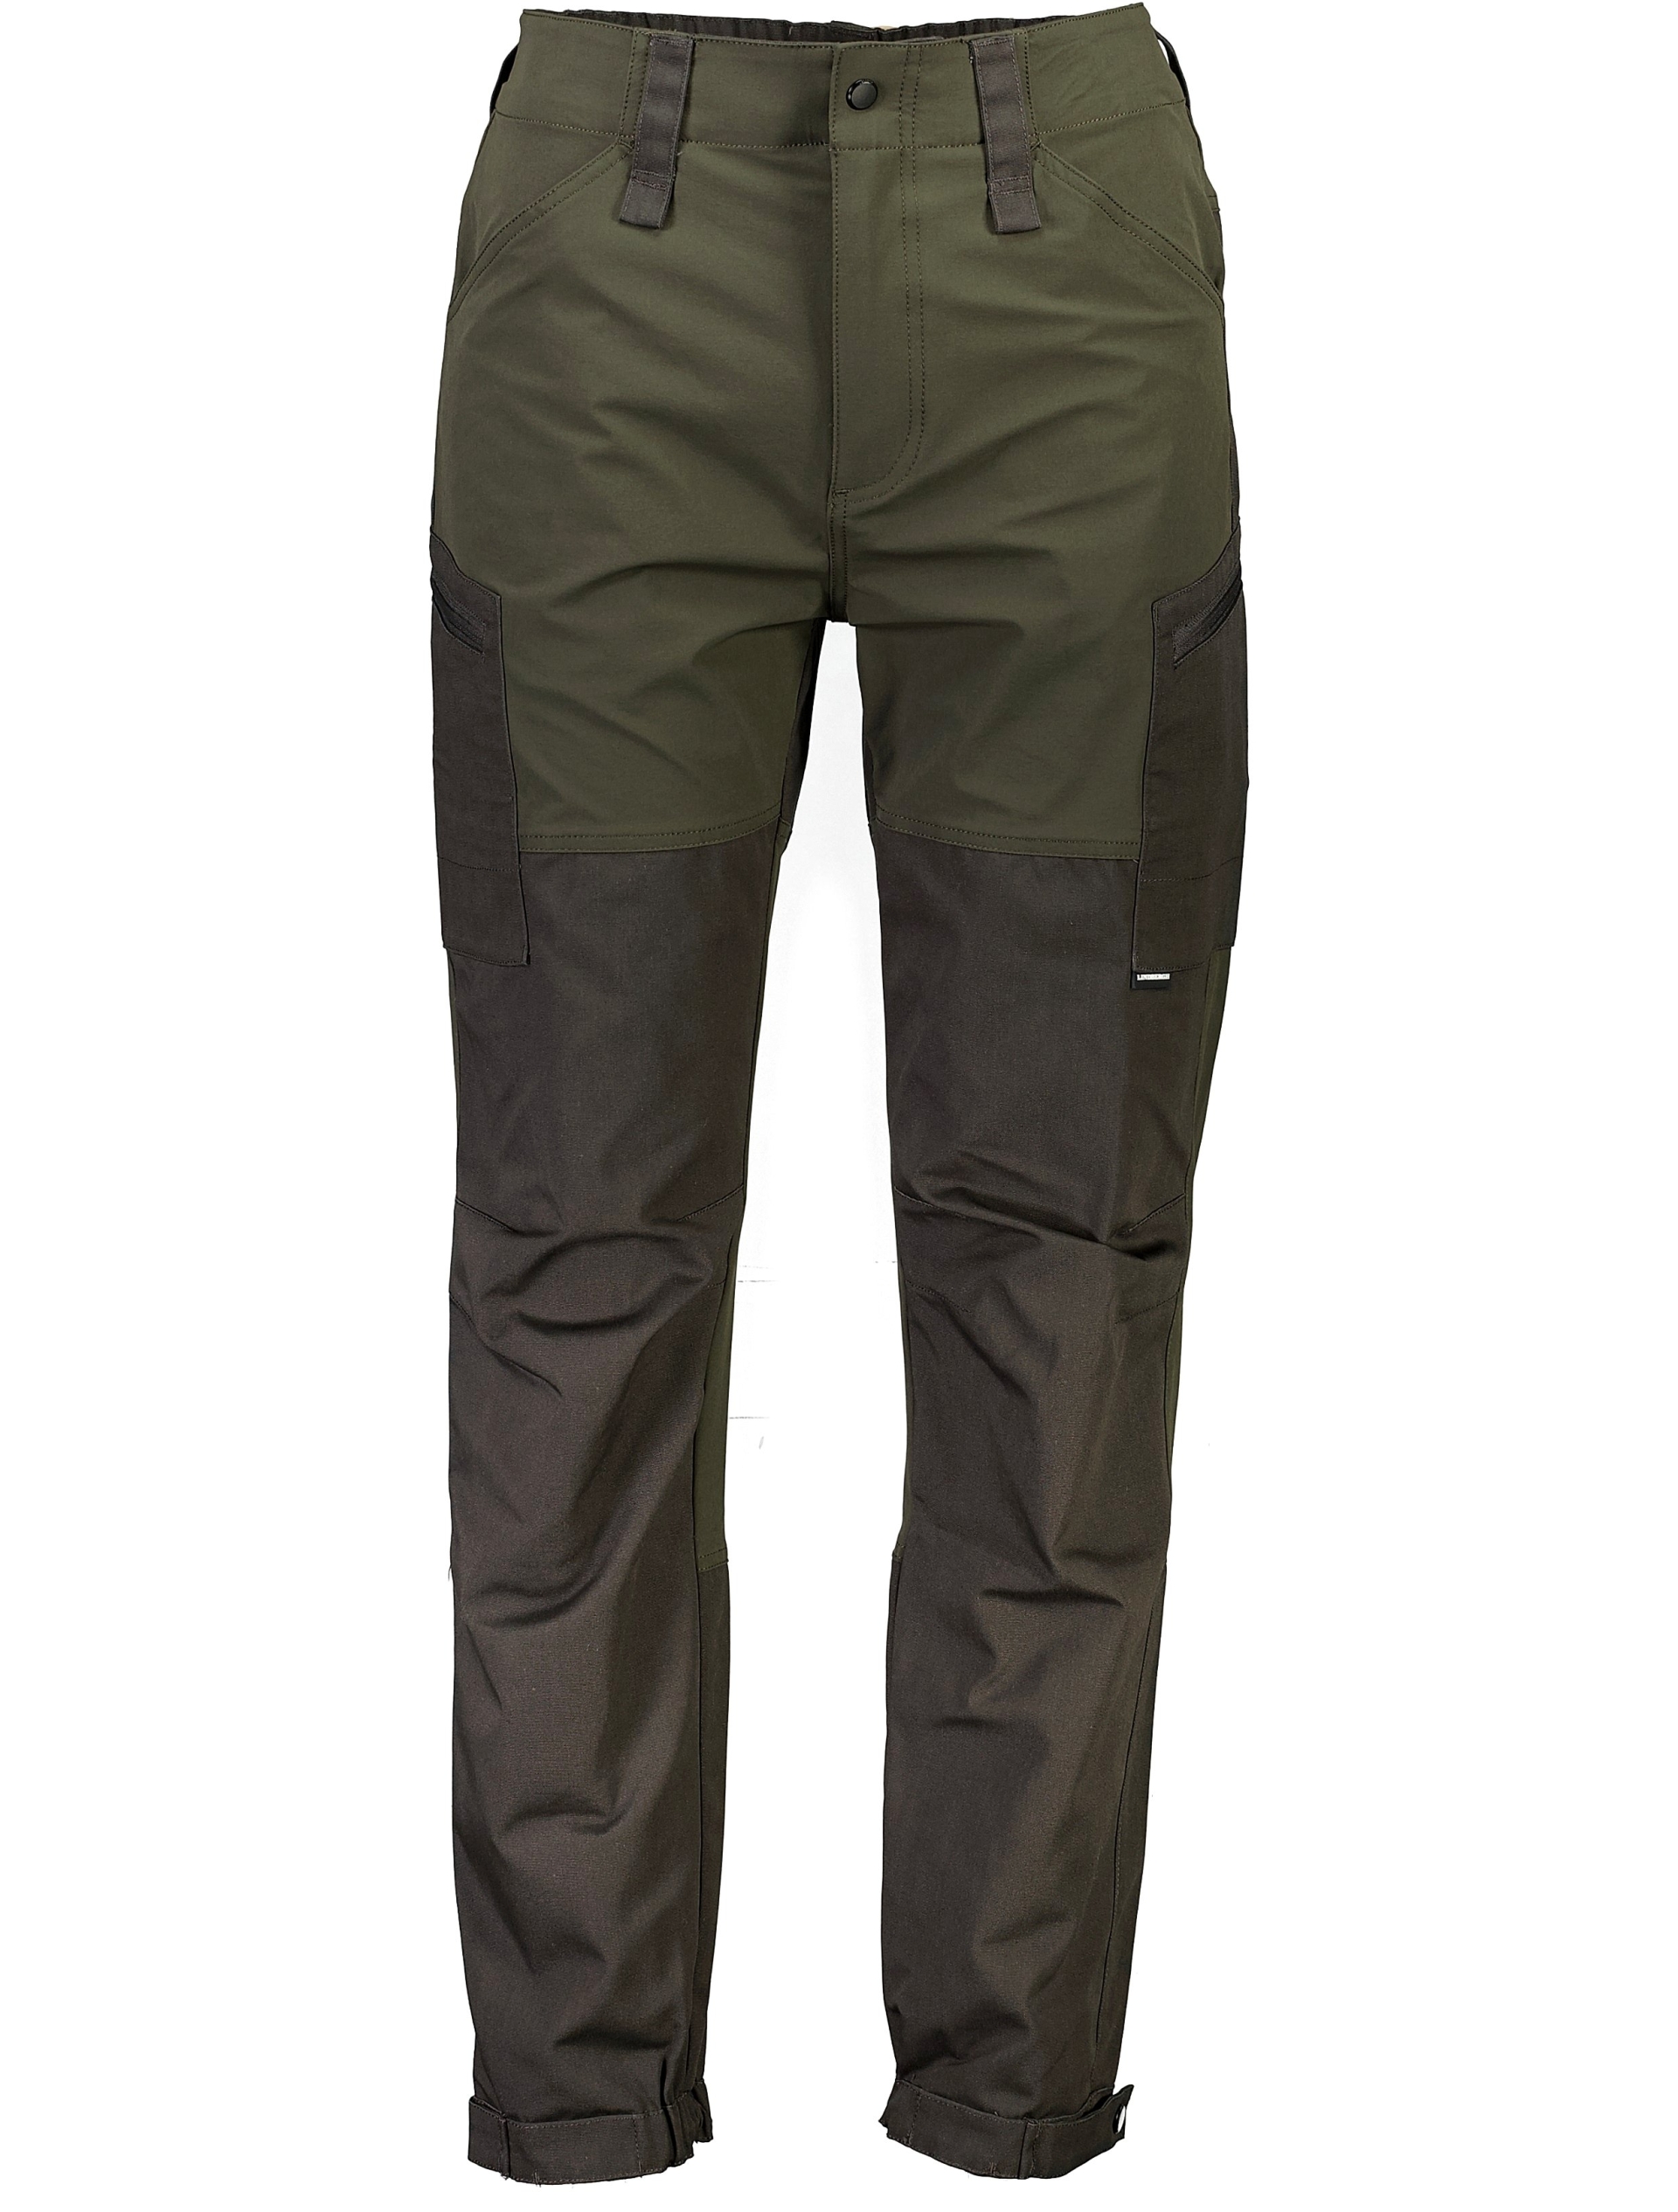 Lindbergh Casual bukser grøn / army